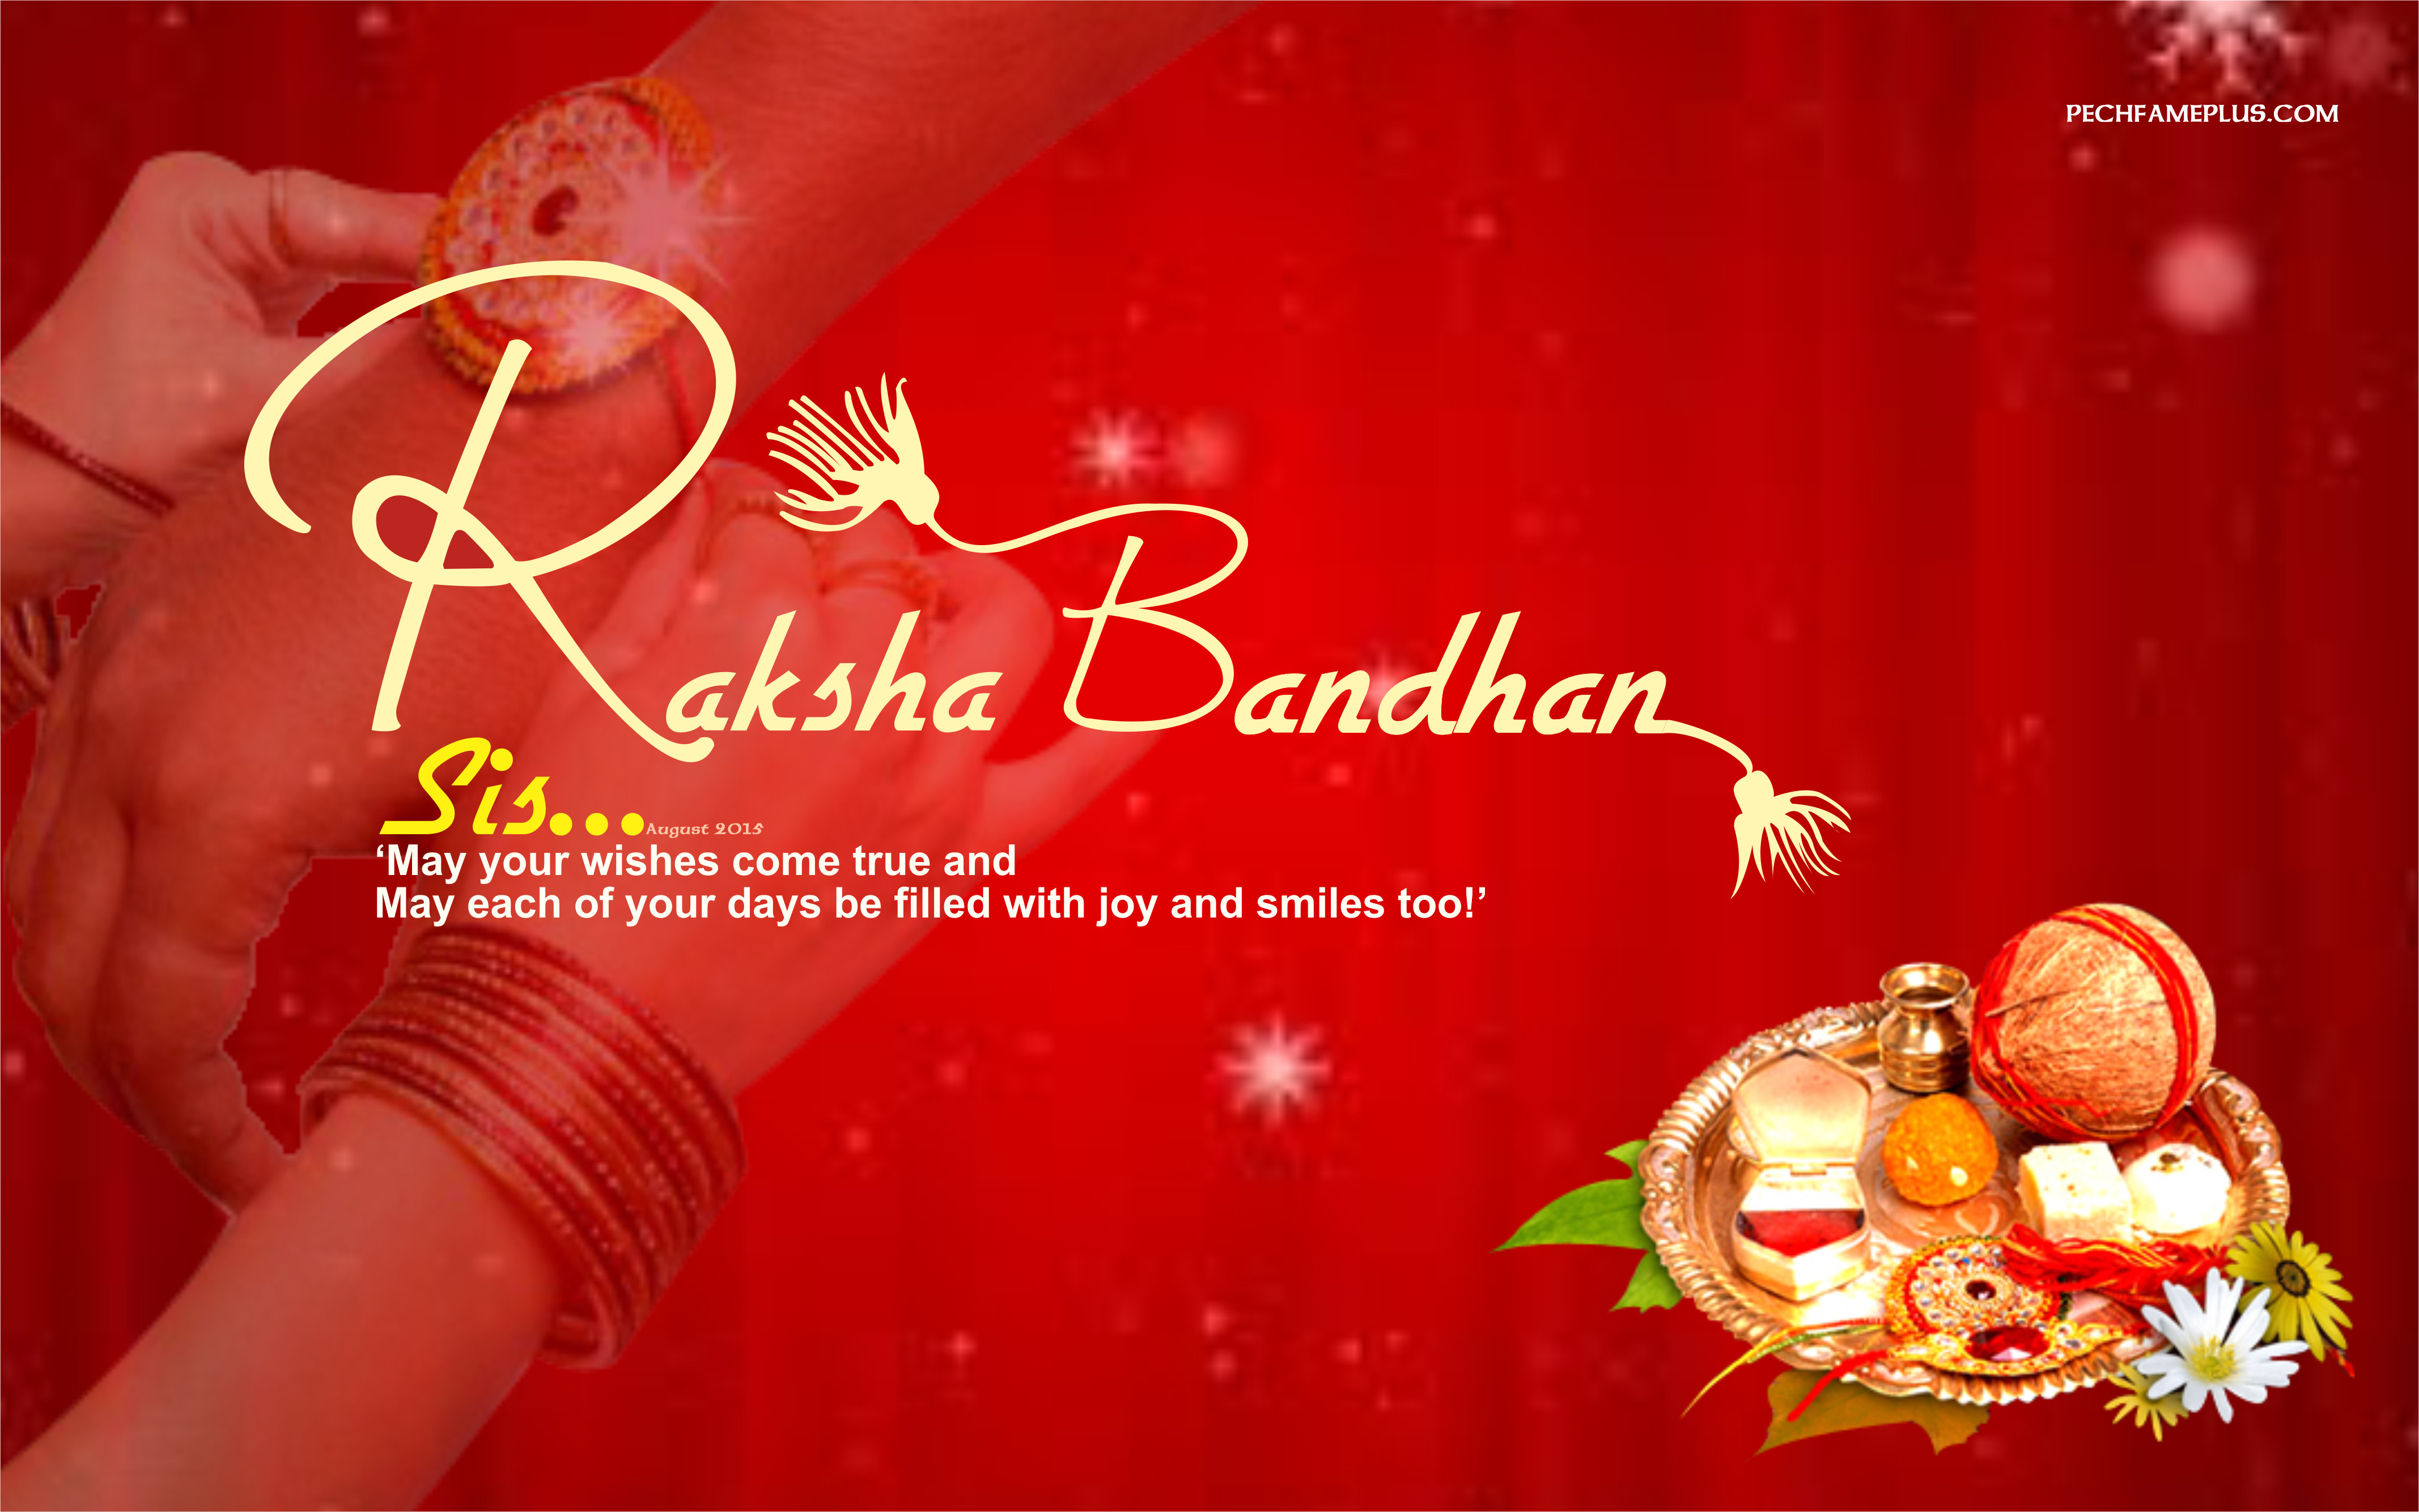 Raksha Bandhan 2018 HD Wallpaper Cover Photos Images